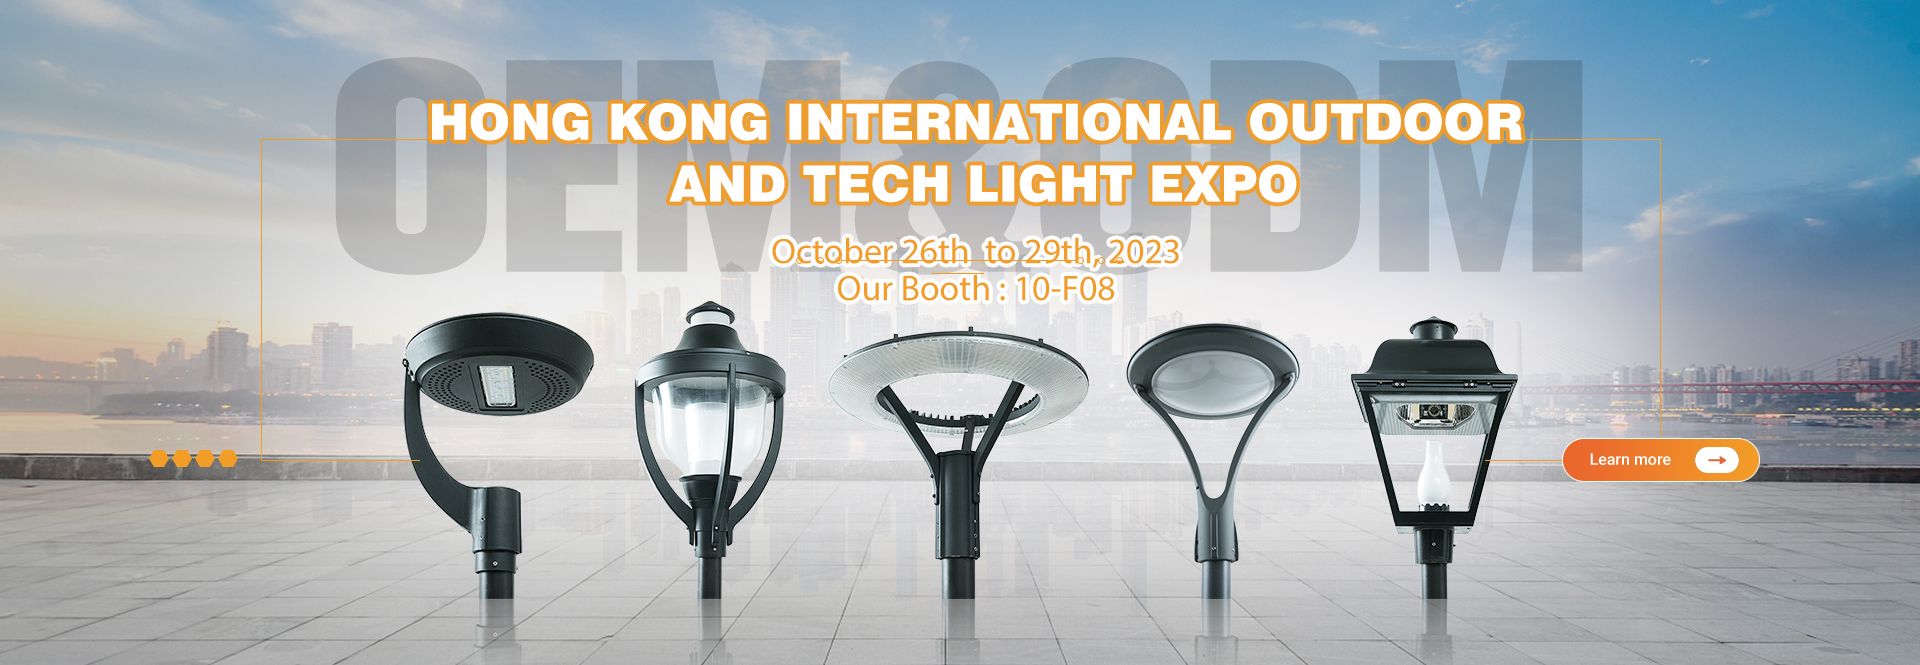 Hong Kong International Outdoor Ug Tech Light Expo